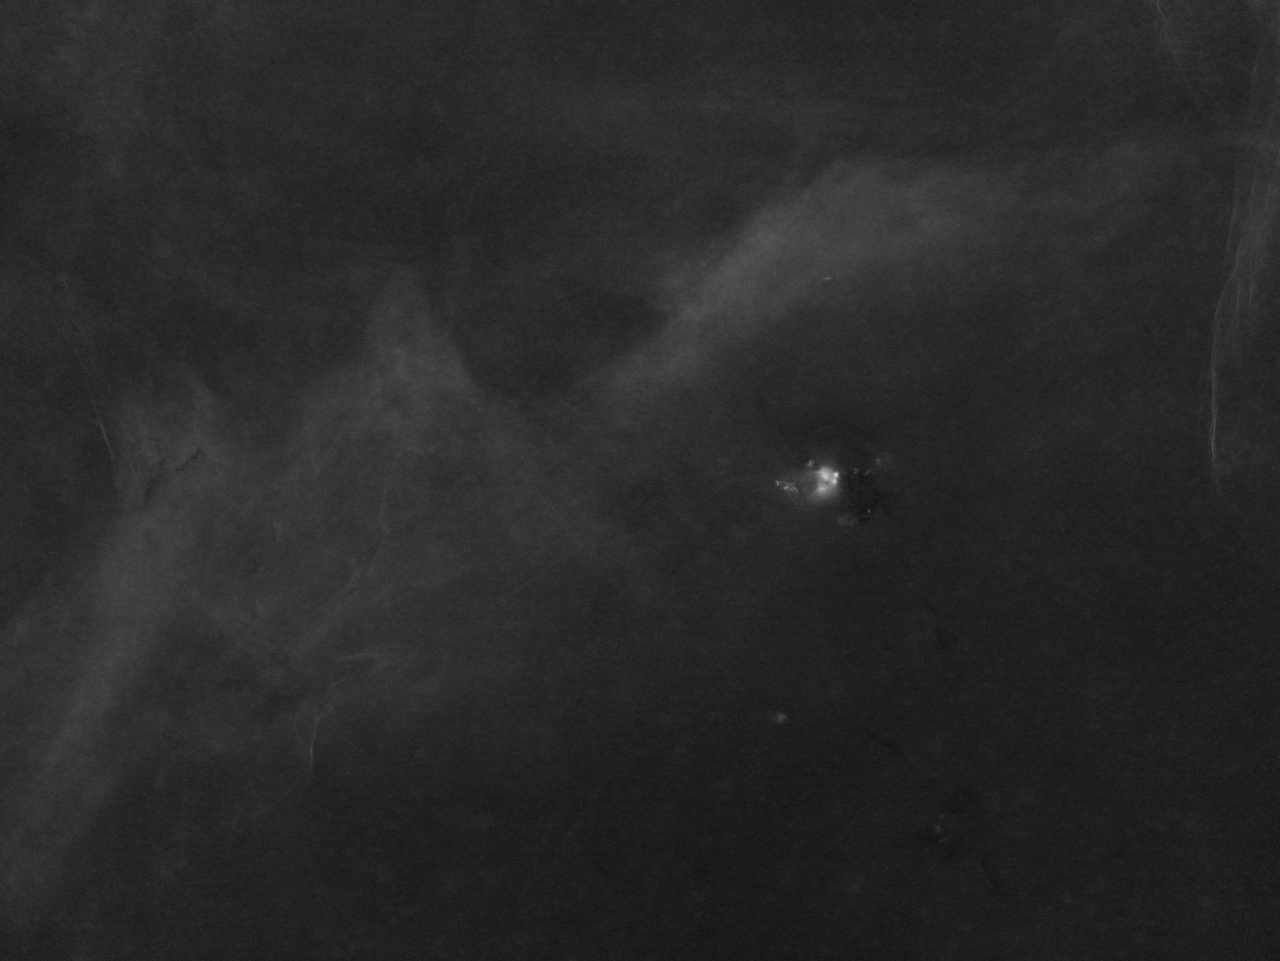 NGC7129 NGC7142 Take 2b Ha 149x360s Starless jpg